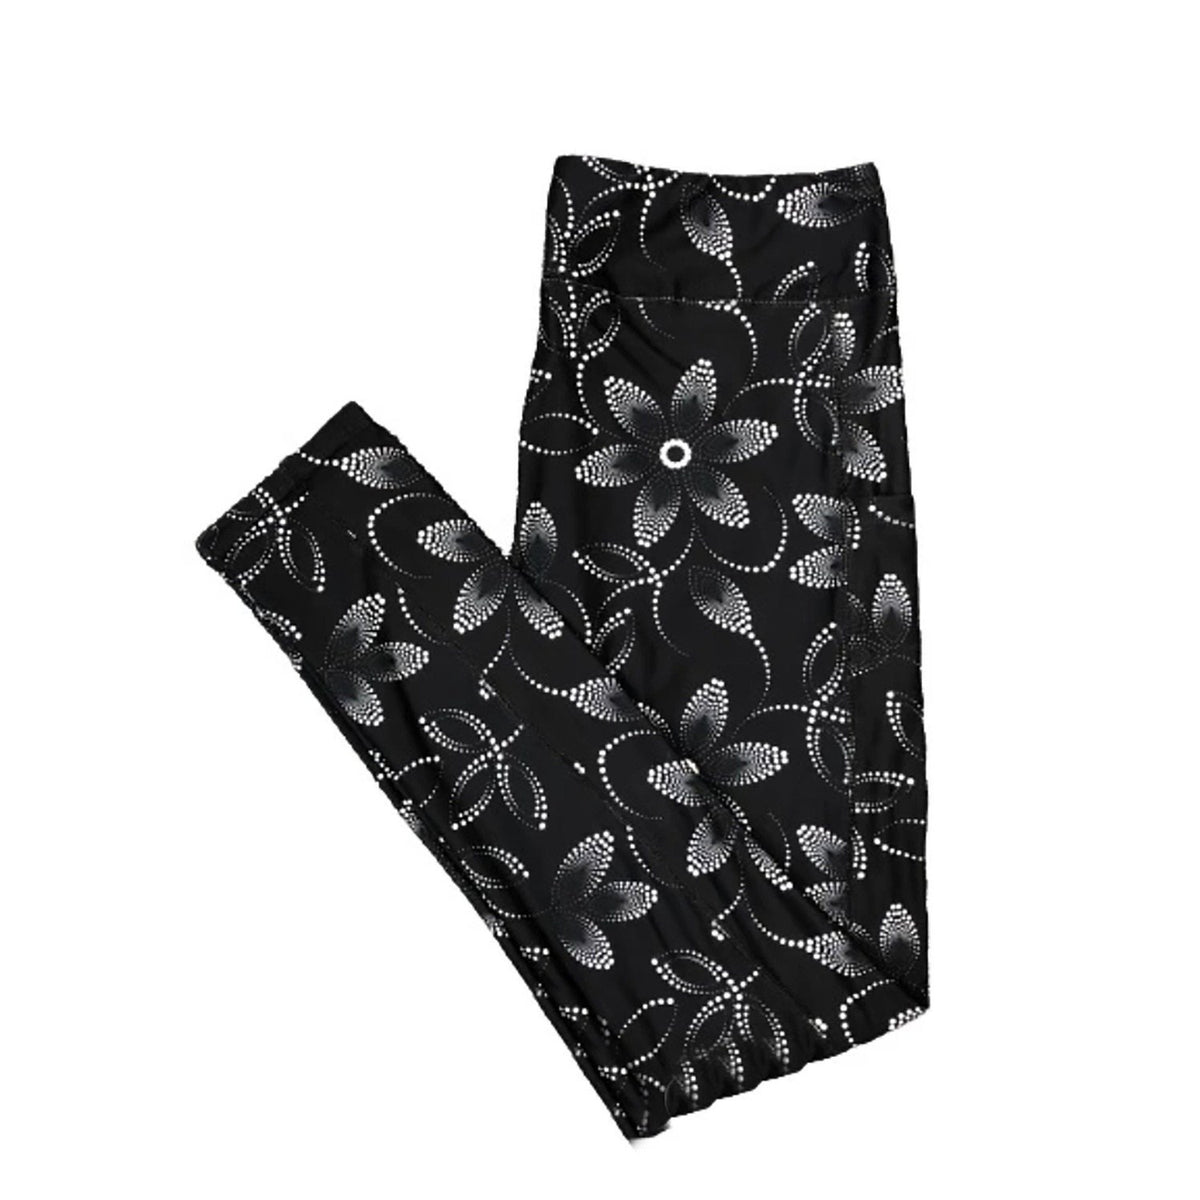 Flower Dot Leggings Black and White with Pockets